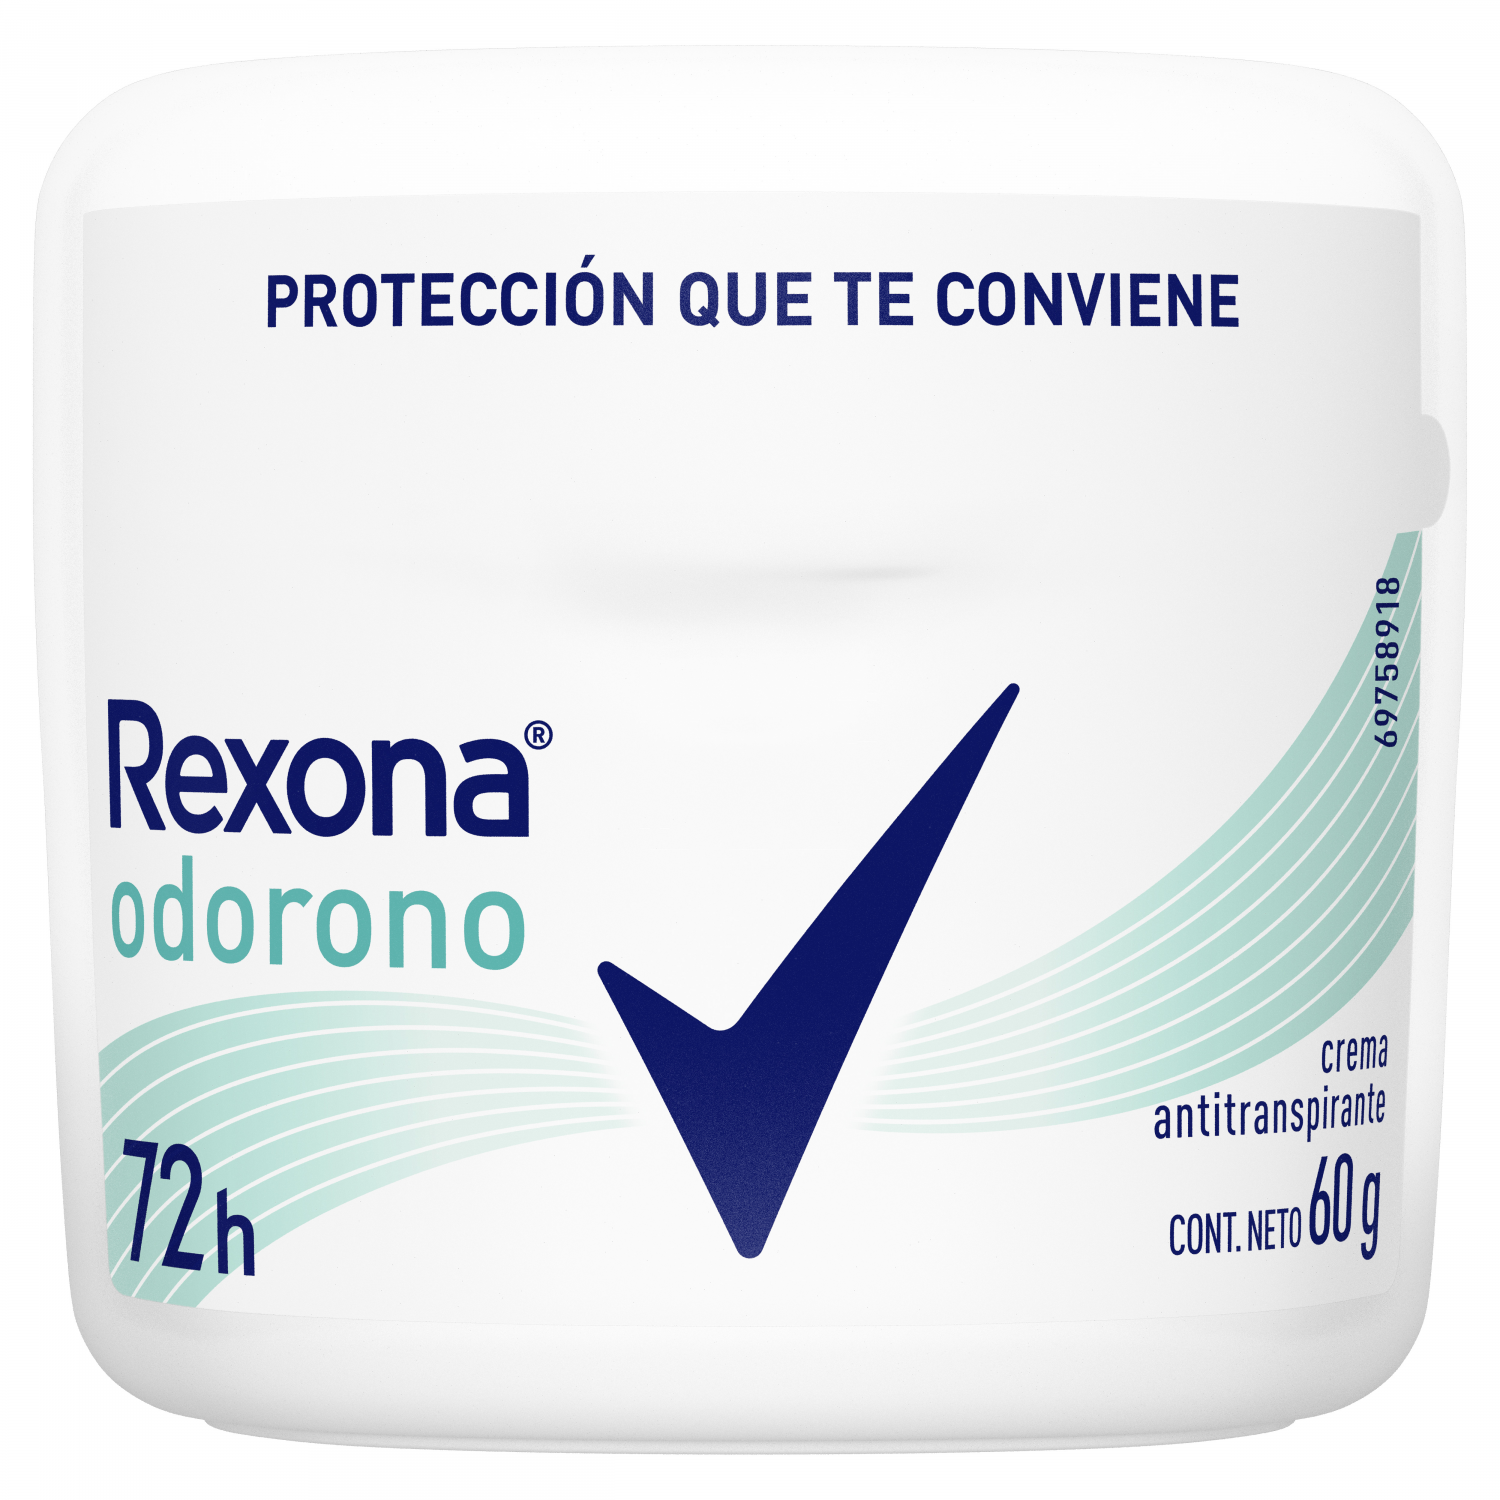 DES.CR.REXONA ODORONOx60 72HS